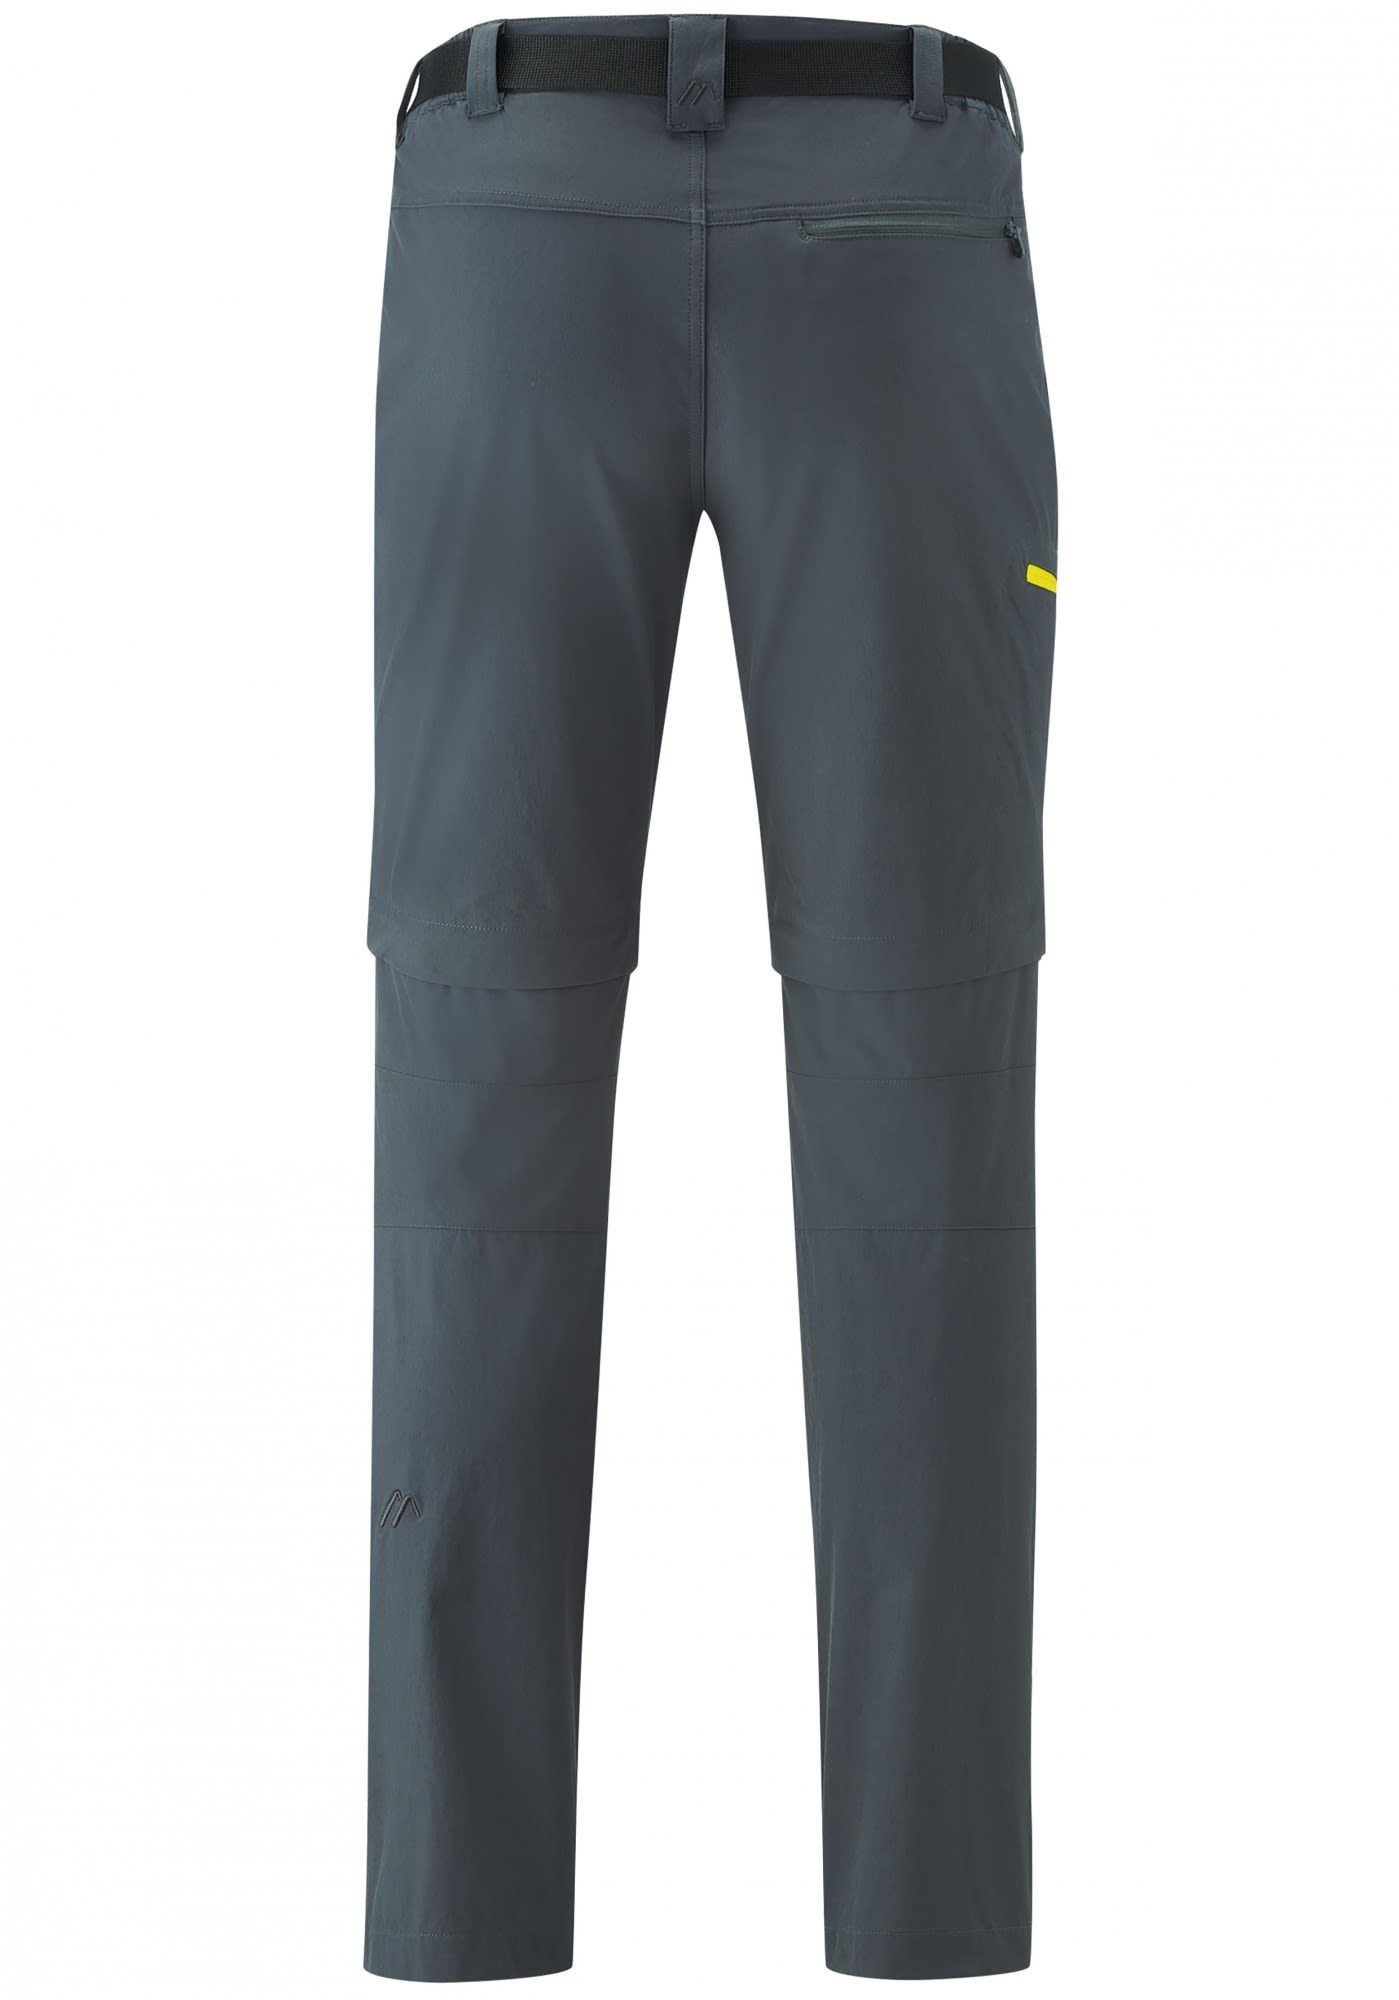 Maier Sports Funktionshose Tajo 15 Outdoorhose mit flexiblem Hosenbund,  Vielseitige atmungsaktive Herren Zip-Off Hose